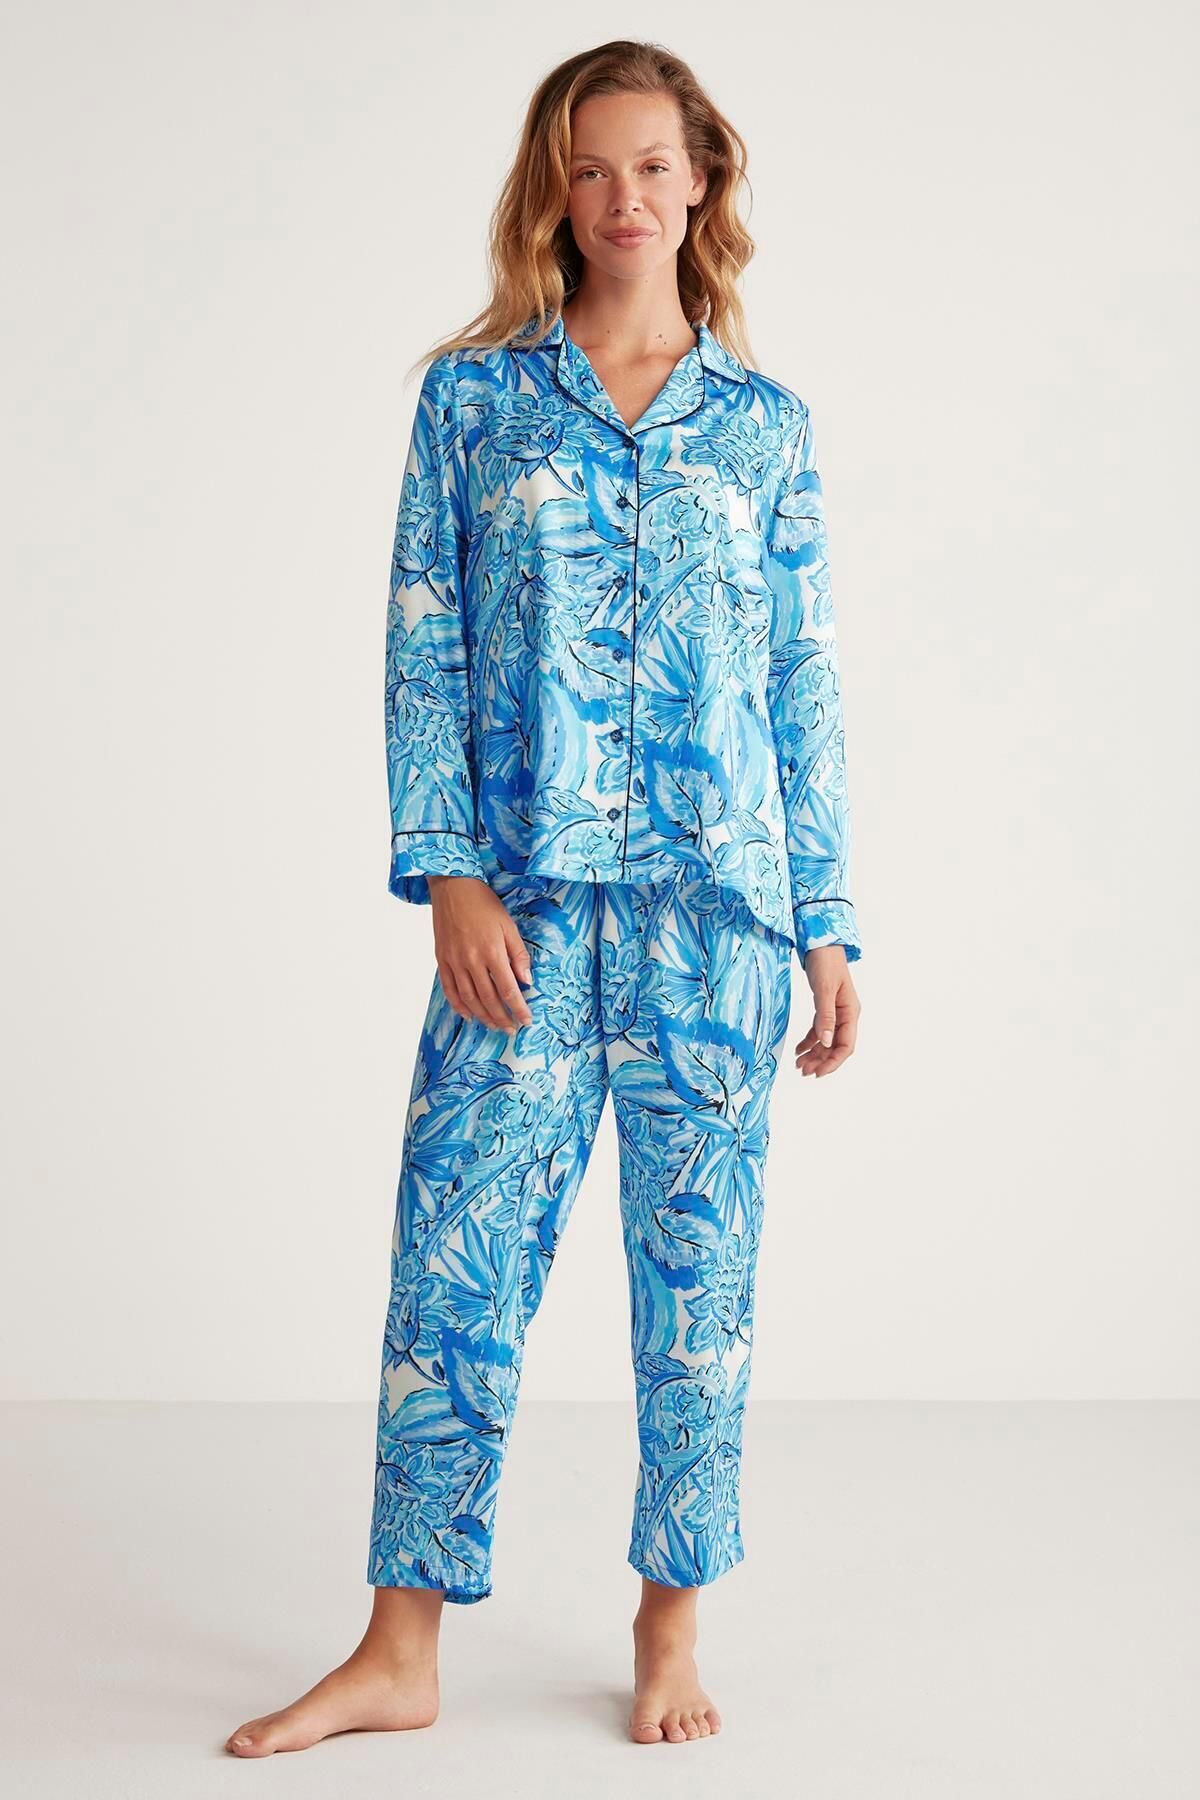 Penye Mood Çiçek desenli pijama takımı